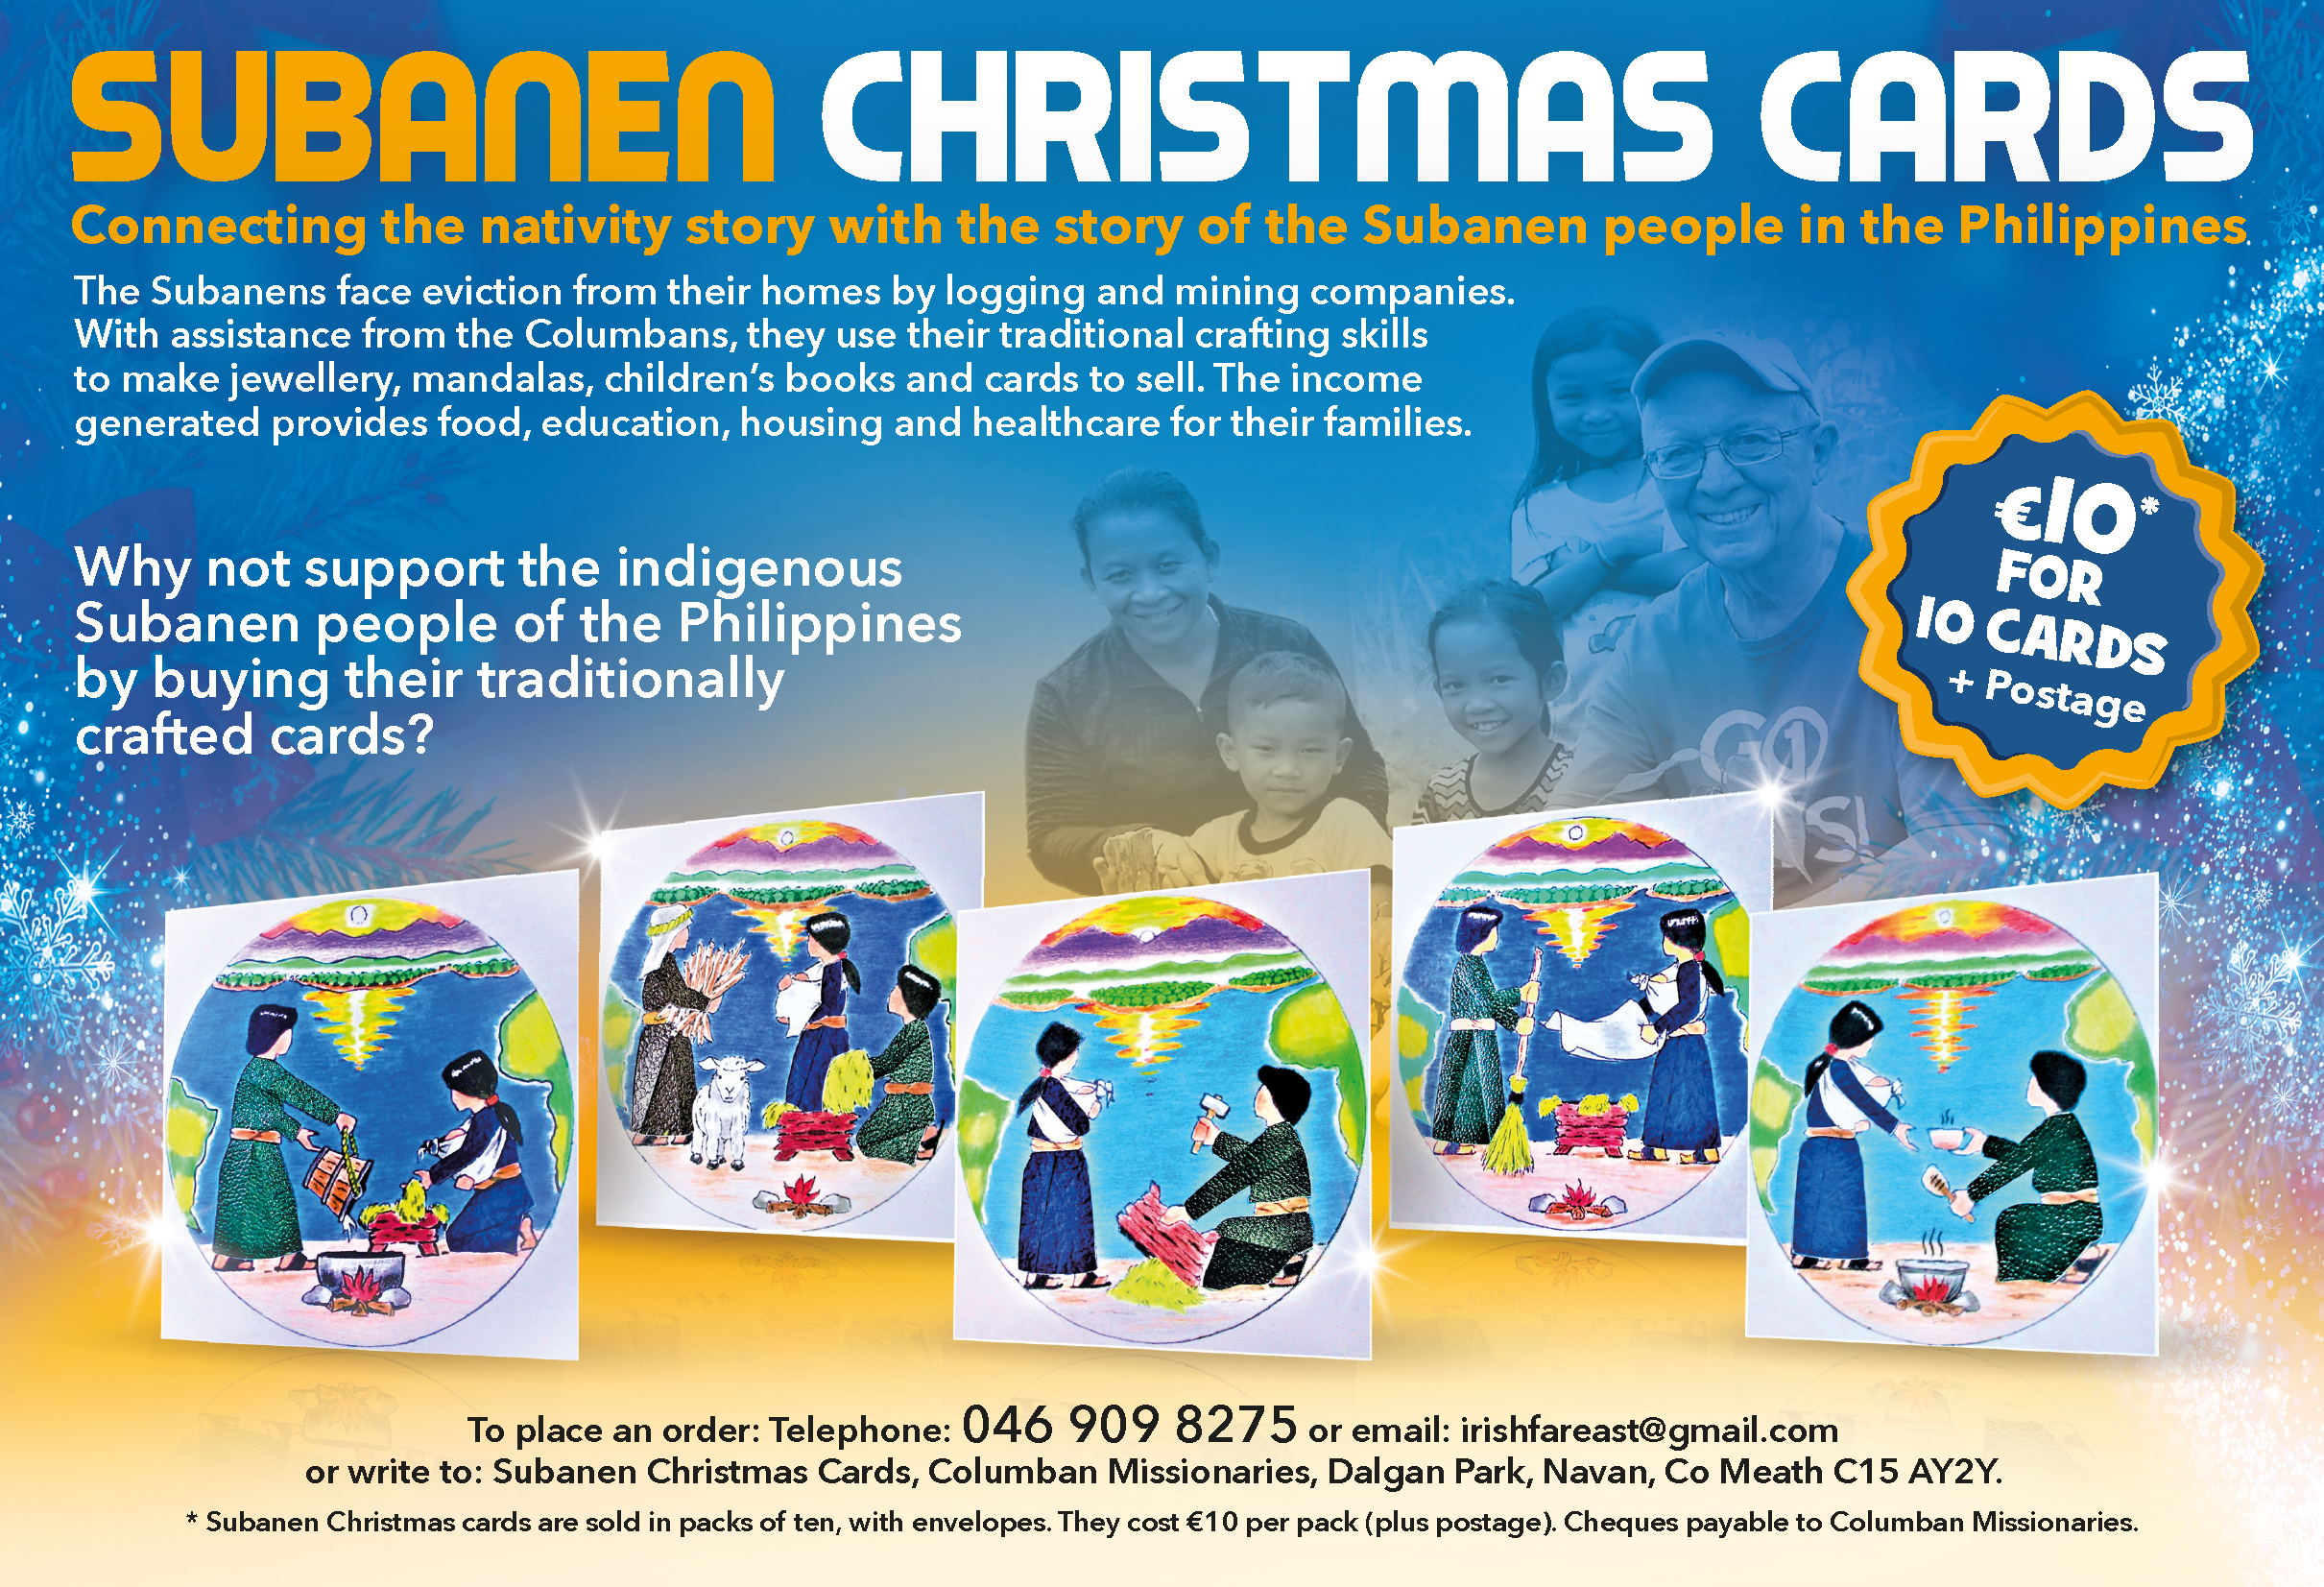 Subanen Christmas cards are on sale!